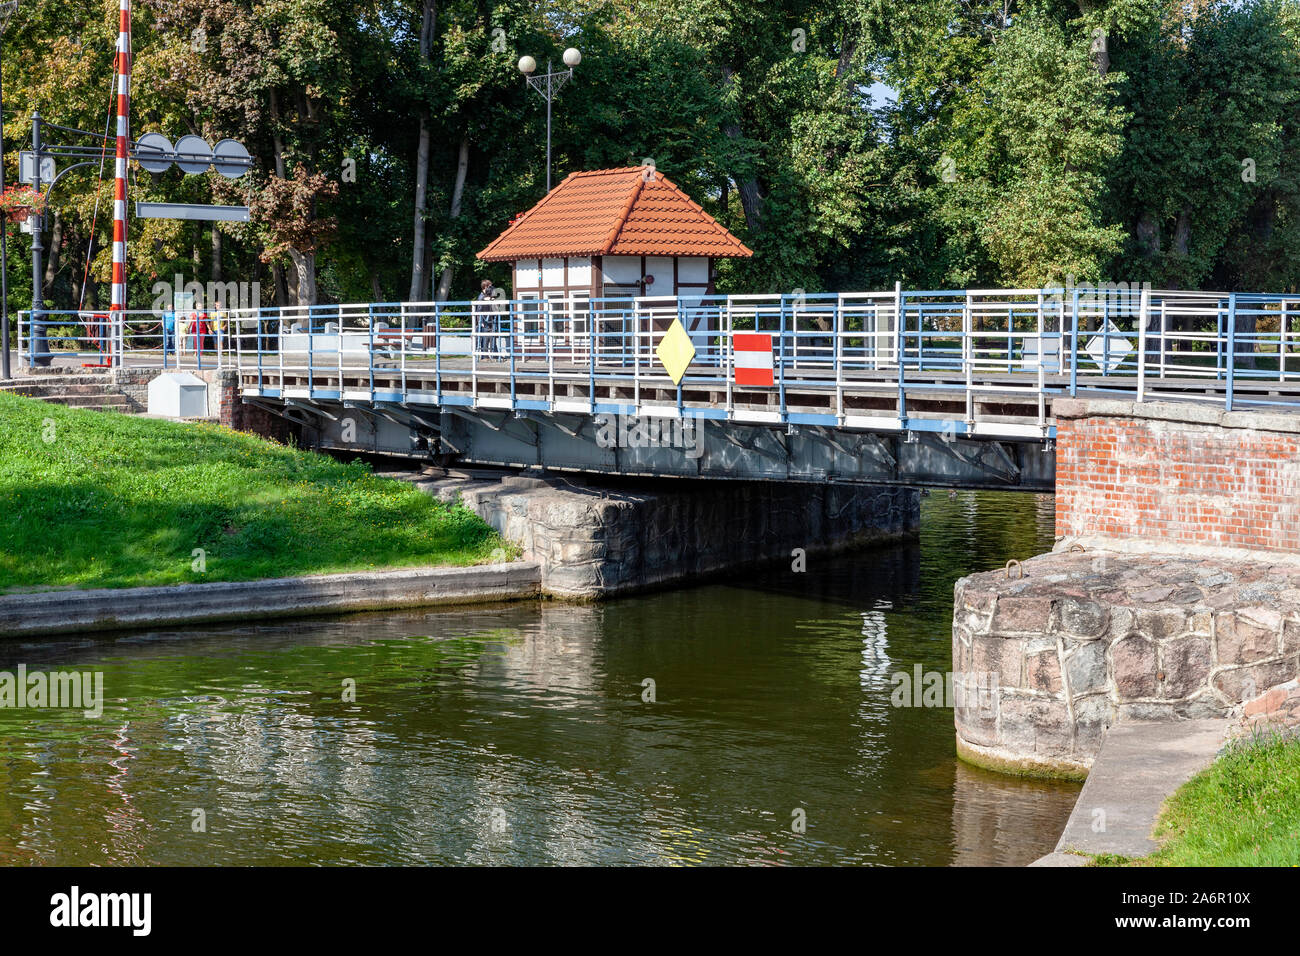 Gizycko, a historic, active swing bridge on the Giżycko Canal, Poland Stock Photo